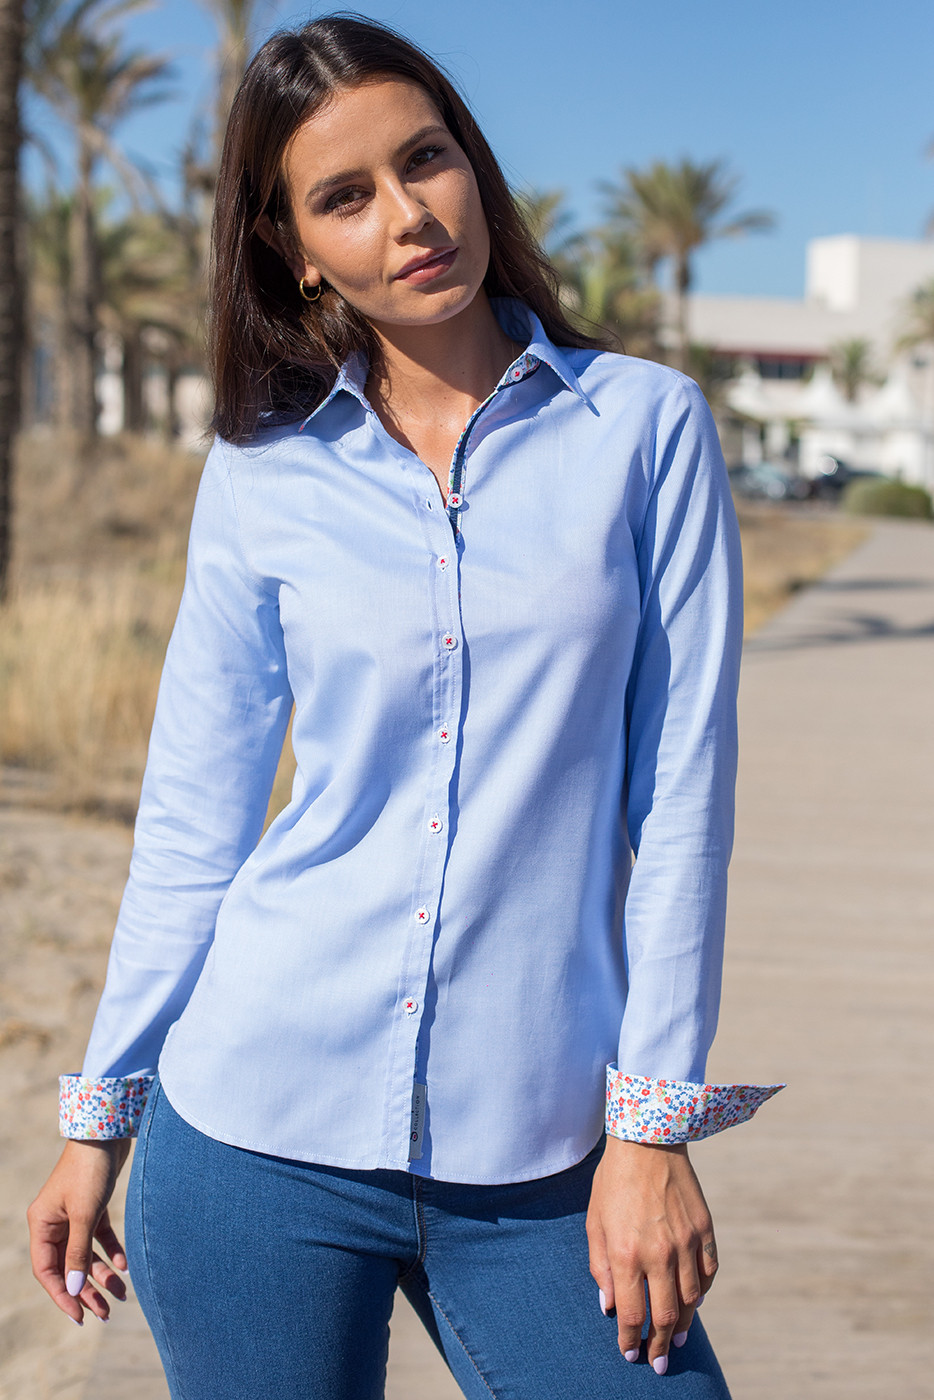 Camisas De Mujer Primavera verano botón camiseta moda mujer blusa ropa  femenina (azul cielo L) Ygjytge para Mujer cielo azul T M